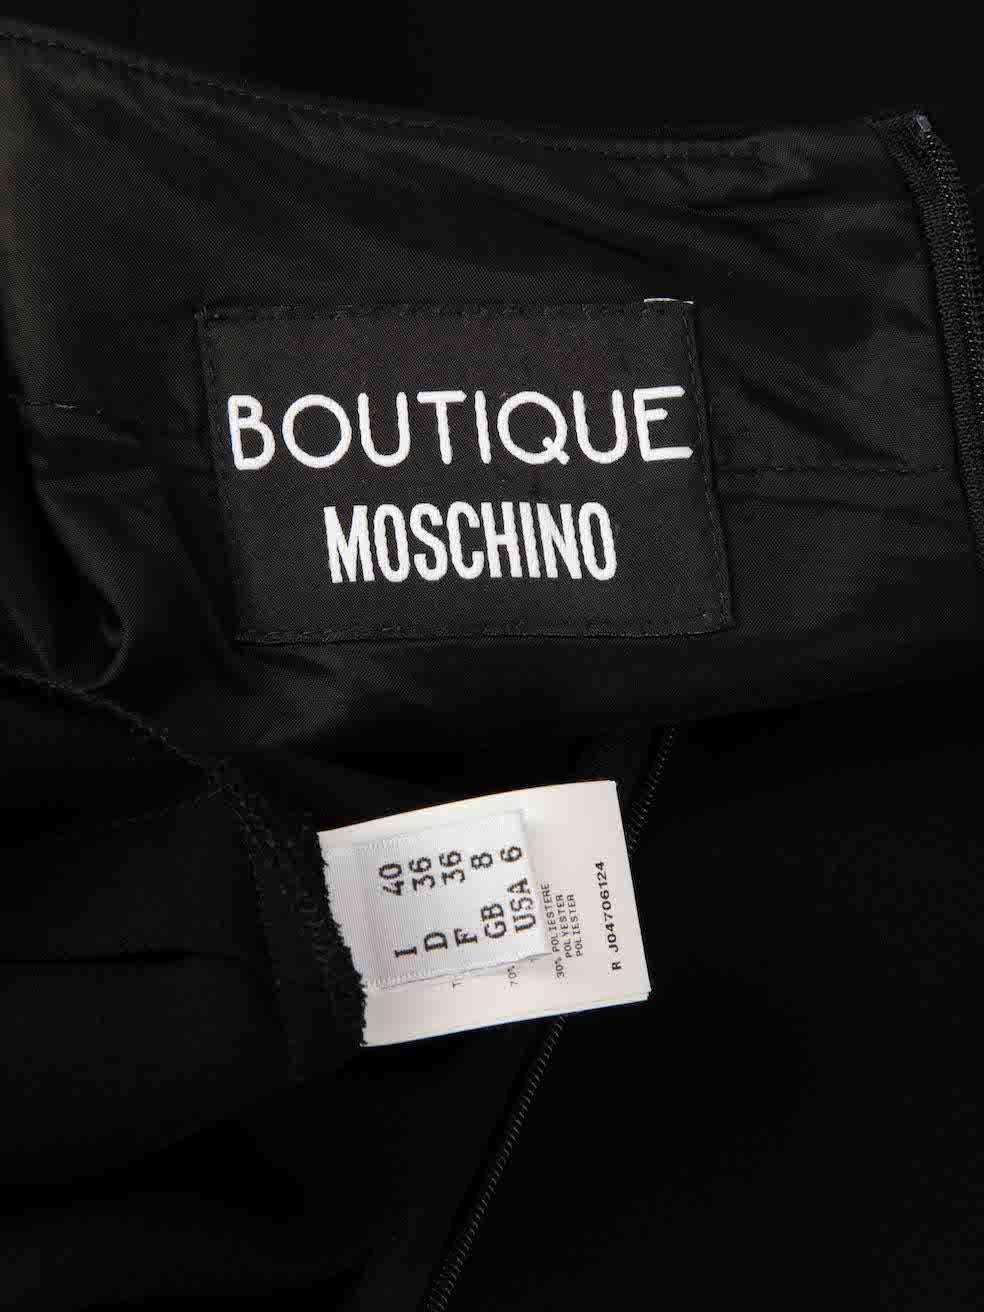 Moschino Women's Boutique Moschino Black Flower Embroidered Mini Dress 1